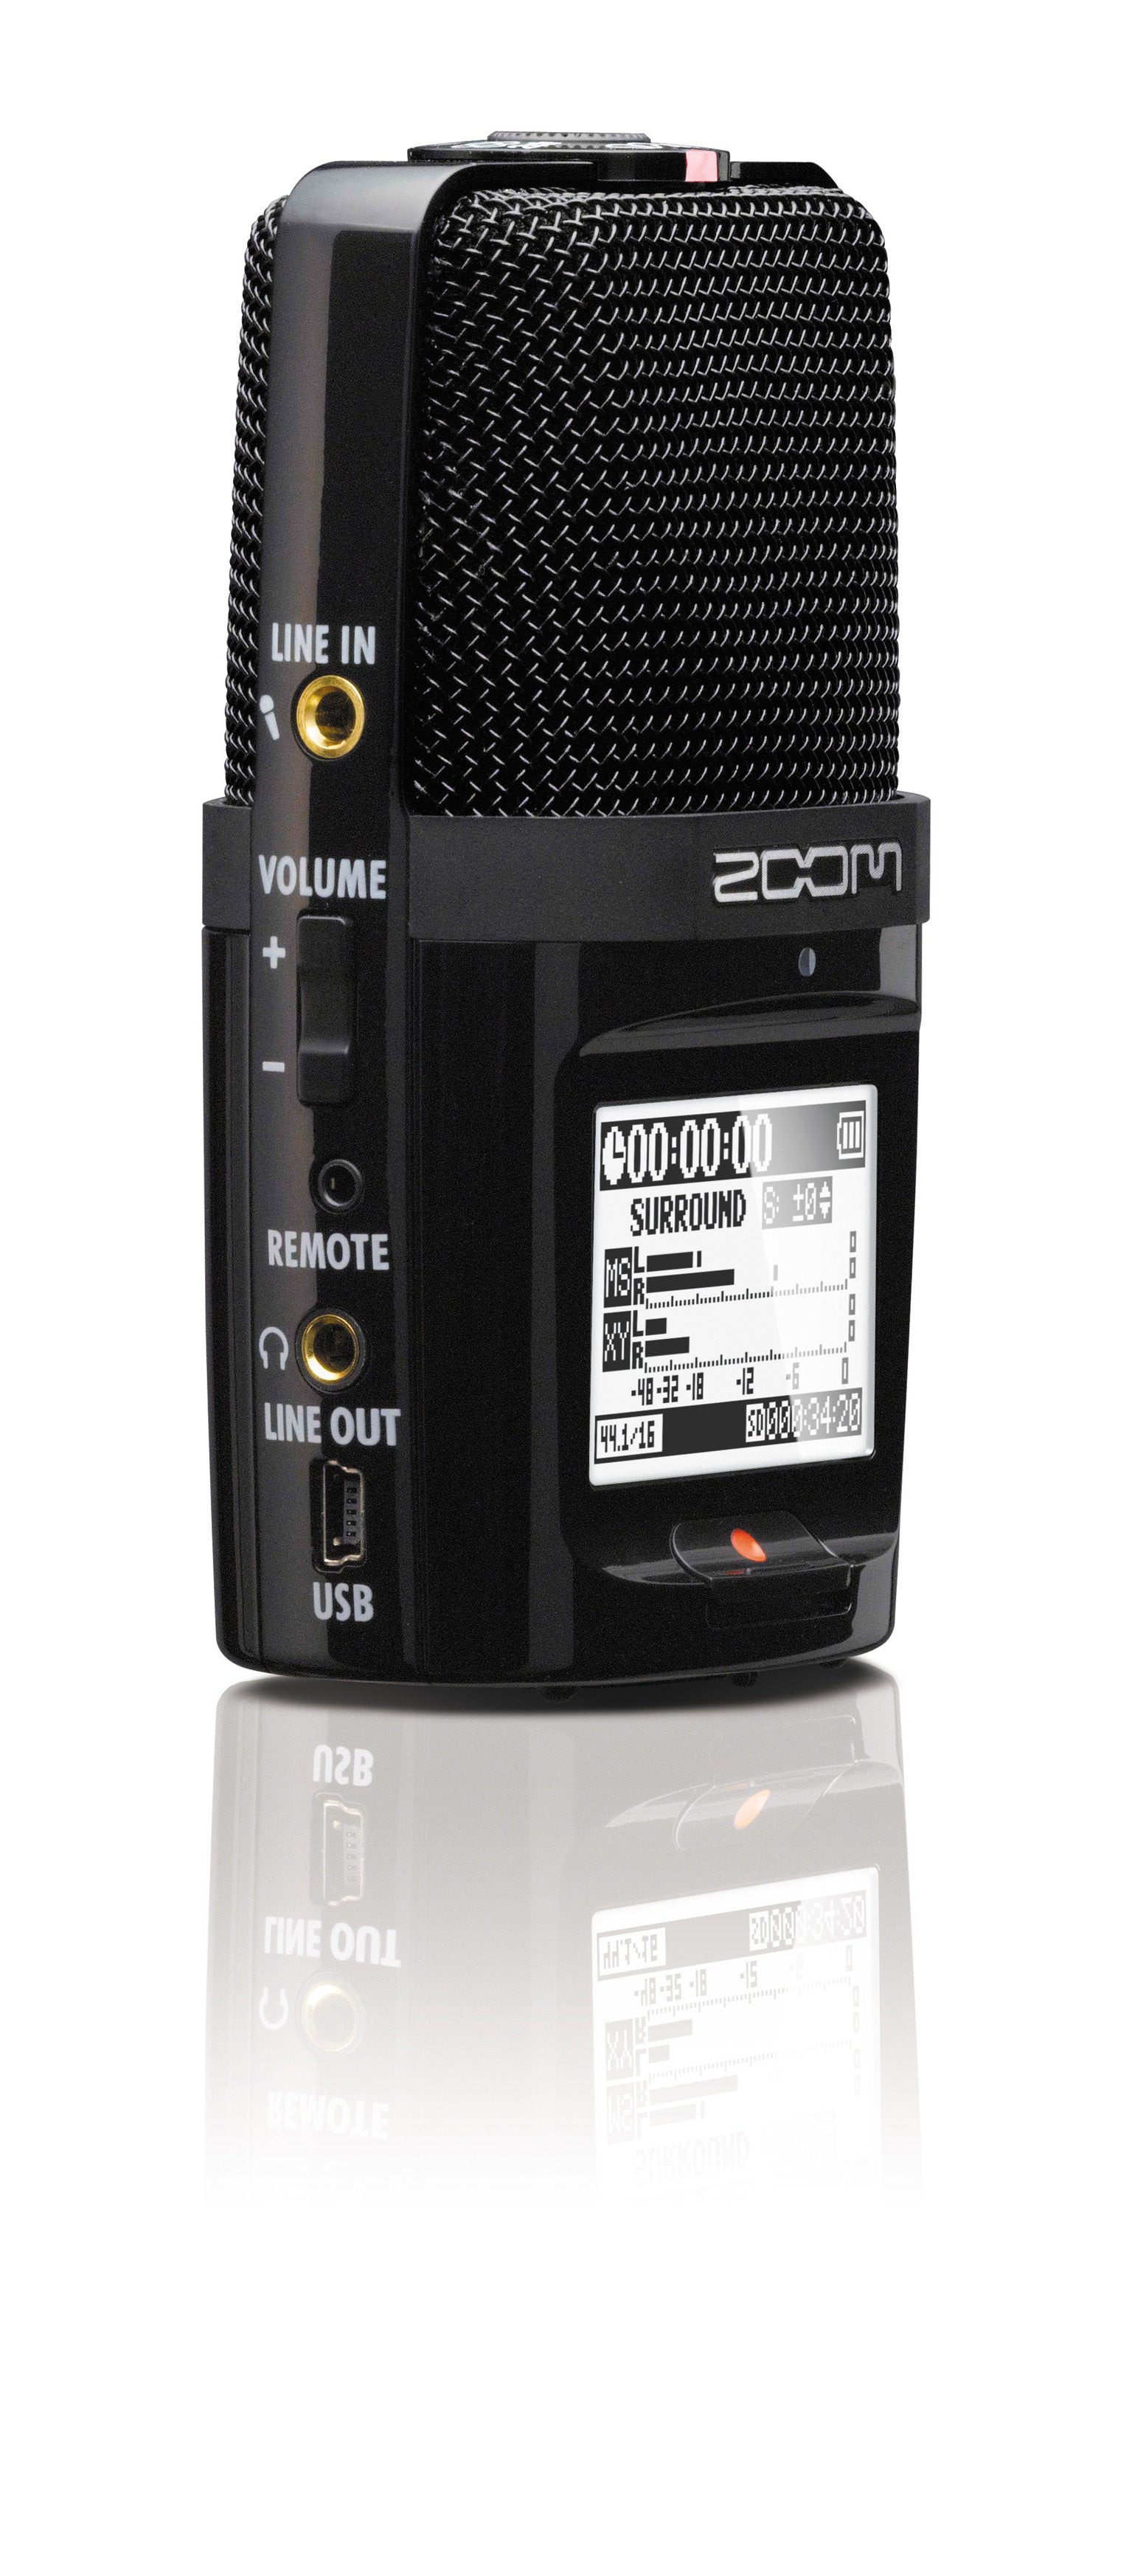 Zoom H2n - Handy Recorder | 305broadcast